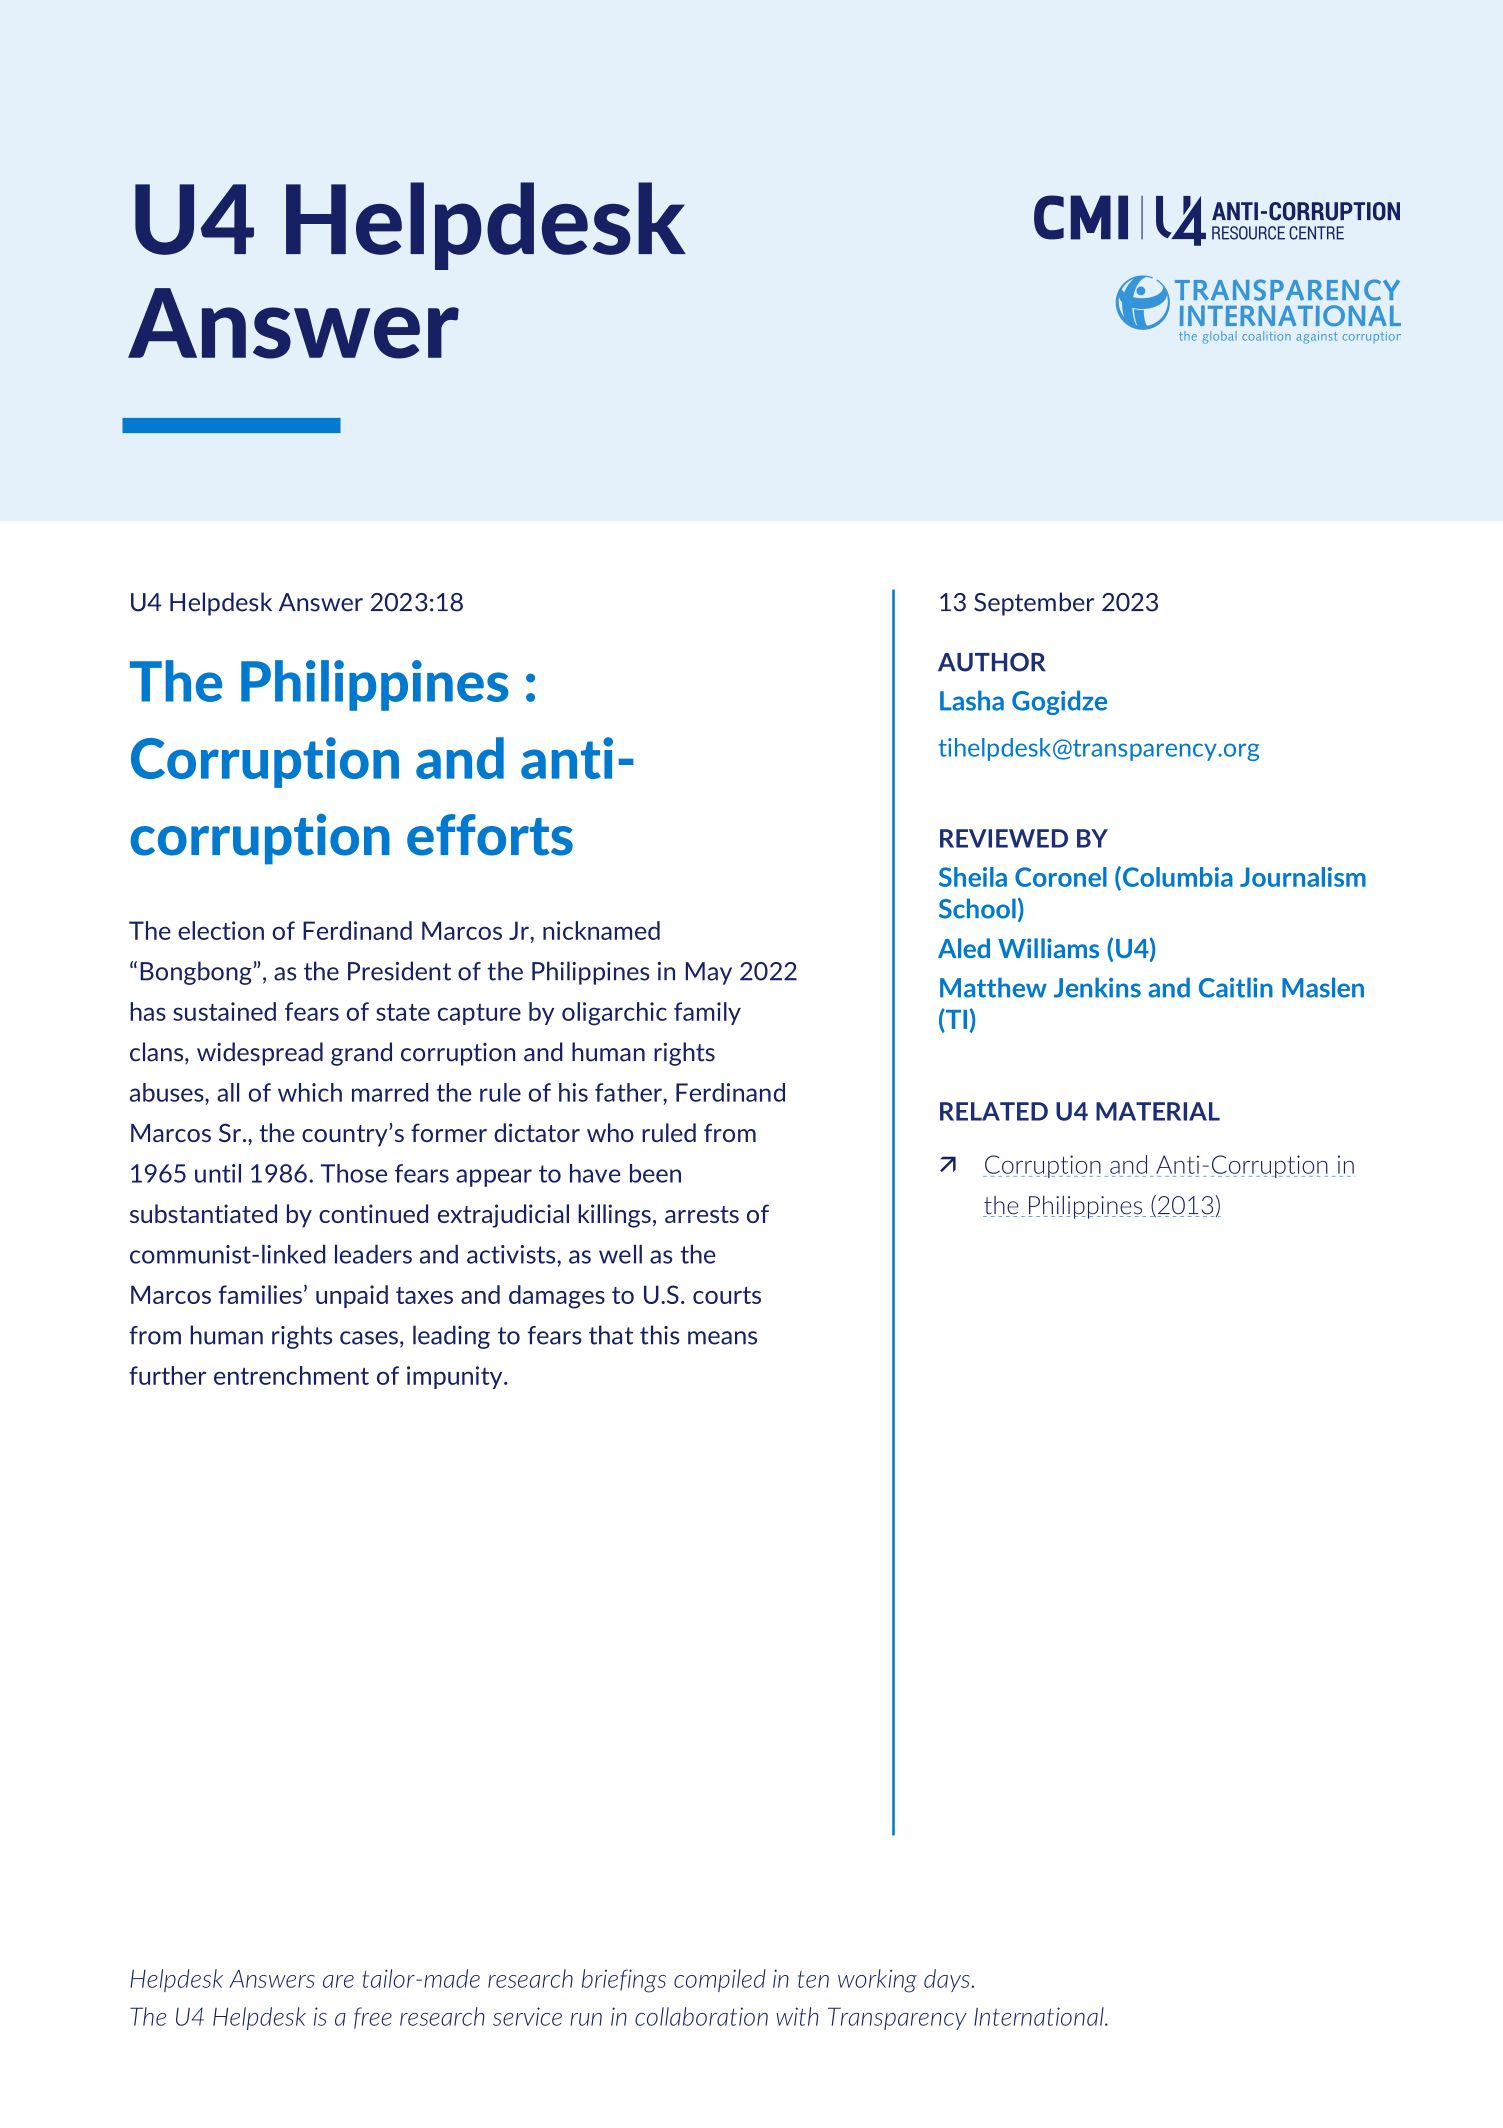 The Philippines: Corruption and anti-corruption